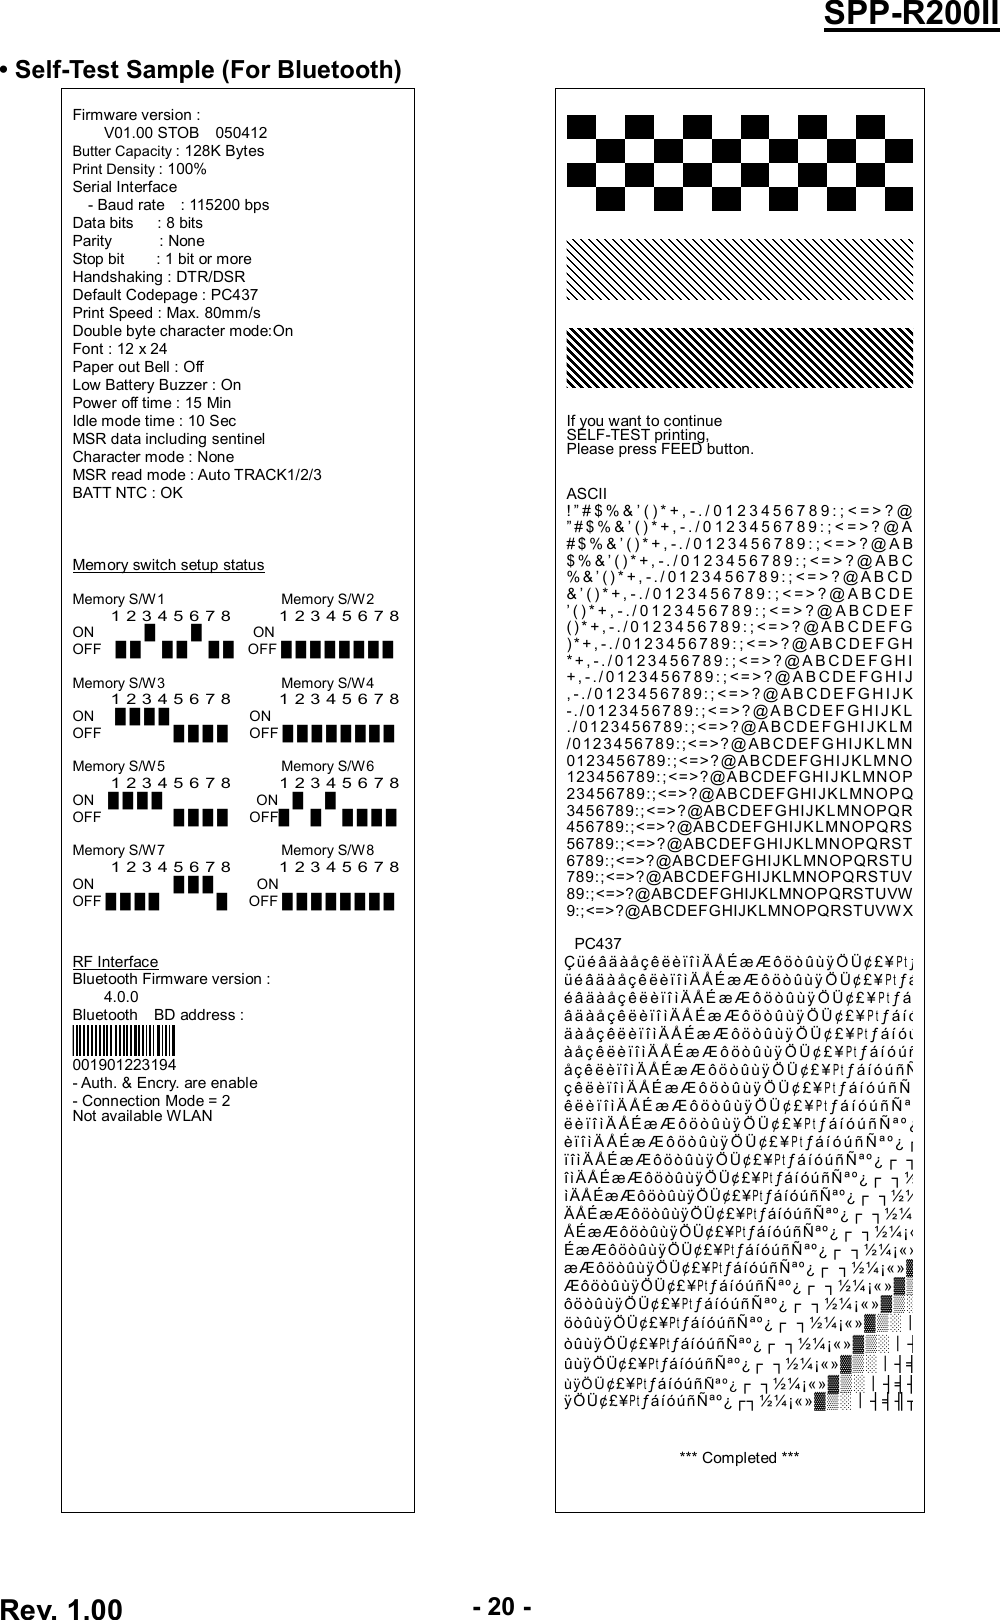  Rev. 1.00 - 20 - SPP-R200II • Self-Test Sample (For Bluetooth)  Firmware version : V01.00 STOB    050412 Butter Capacity : 128K Bytes Print Density : 100% Serial Interface - Baud rate    : 115200 bps Data bits      : 8 bits Parity            : None Stop bit        : 1 bit or more Handshaking : DTR/DSR Default Codepage : PC437 Print Speed : Max. 80mm/s Double byte character mode:On Font : 12 x 24 Paper out Bell : Off Low Battery Buzzer : On Power off time : 15 Min Idle mode time : 10 Sec MSR data including sentinel Character mode : None MSR read mode : Auto TRACK1/2/3 BATT NTC : OK    Memory switch setup status  Memory S/W1                                Memory S/W2 1 2 3 4 5 6 7 8          1 2 3 4 5 6 7 8 ON              █          █              ON OFF    █ █      █ █      █ █    OFF █ █ █ █ █ █ █ █  Memory S/W3                                Memory S/W4 1 2 3 4 5 6 7 8          1 2 3 4 5 6 7 8 ON      █ █ █ █                      ON OFF                    █ █ █ █      OFF █ █ █ █ █ █ █ █  Memory S/W5                                Memory S/W6   1 2 3 4 5 6 7 8          1 2 3 4 5 6 7 8 ON    █ █ █ █                          ON    █      █ OFF                    █ █ █ █      OFF█      █      █ █ █ █  Memory S/W7                                Memory S/W8 1 2 3 4 5 6 7 8          1 2 3 4 5 6 7 8 ON                      █ █ █            ON OFF █ █ █ █                █      OFF █ █ █ █ █ █ █ █    RF Interface Bluetooth Firmware version :         4.0.0 Bluetooth    BD address :  001901223194 - Auth. &amp; Encry. are enable - Connection Mode = 2 Not available WLAN                                                          If you want to continue SELF-TEST printing, Please press FEED button.   ASCII ! ” # $ % &amp; ’ ( ) * + , - . / 0 1 2 3 4 5 6 7 8 9 : ; &lt; = &gt; ? @ ” # $ % &amp; ’ ( ) * + , - . / 0 1 2 3 4 5 6 7 8 9 : ; &lt; = &gt; ? @ A # $ % &amp; ’ ( ) * + , -. / 0 1 2 3 4 5 6 7 8 9 : ; &lt; = &gt; ? @ A B $ % &amp; ’ ( ) * + , - . / 0 1 2 3 4 5 6 7 8 9 : ; &lt;= &gt; ? @ A B C % &amp; ’ () * + , - ./ 0 1 2 3 4 5 6 7 8 9: ; &lt; = &gt; ? @A B C D &amp; ’ ( ) * + , - . / 0 1 2 3 4 5 6 7 8 9 : ; &lt; = &gt; ? @ A B C D E ’ ( ) * + , - . / 0 1 2 3 4 5 6 7 8 9 : ; &lt; = &gt; ? @ A B C D E F () * + ,- . /0 1 2 34 5 6 78 9 : ; &lt;= &gt; ? @A B C DE F G ) * + , - . / 0 1 2 3 4 5 6 7 8 9 : ; &lt; = &gt; ? @ A B C D E F G H * + , - . / 0 1 2 3 4 5 6 7 8 9 : ; &lt; = &gt; ? @ A B C D E F G H I + , - . / 0 1 2 3 4 5 6 7 8 9 : ; &lt; = &gt; ? @ A B C D E F G HI J , - . / 0 1 2 3 4 5 6 7 8 9 : ; &lt; = &gt; ? @ A B C D E F G H I J K -. / 0 1 2 3 4 5 67 8 9 :; &lt; = &gt; ? @A B C D EF G H I J KL ./ 0123456 7 8 9 : ; &lt; =&gt;?@A BCDE FGHIJ KLM /0123456789:;&lt;=&gt;?@ABCDEF GHIJK L MN 0123456789:;&lt;=&gt;?@ABCDEFGHIJKLMNO 123456789:;&lt;=&gt;?@ABCDEFGHIJKLMNOP 23456789:;&lt;=&gt;?@ABCDEFGHIJKLMNOPQ 3456789:;&lt;=&gt;?@ABCDEFGHIJKLMNOPQR 456789:;&lt;=&gt;?@ABCDEFGHIJKLMNOPQRS 56789:;&lt;=&gt;?@ABCDEFGHIJKLMNOPQRST 6789:;&lt;=&gt;?@ABCDEFGHIJKLMNOPQRSTU 789:;&lt;=&gt;?@ABCDEFGHIJKLMNOPQRSTUV 89:;&lt;=&gt;?@ABCDEFGHIJKLMNOPQRSTUVW 9:;&lt;=&gt;?@ABCDEFGHIJKLMNOPQRSTUVWX  PC437 Çü é âä à å çê ë èï î ì Ä ÅÉ æ Æ ôö ò ûù ÿ Ö Ü¢ £ ¥P tƒü é âä à å çê ë èï î ì Ä ÅÉ æ Æ ô ö ò ûù ÿ Ö Ü ¢ £¥P tƒáé â ä à åç ê ë è ï î ì Ä ÅÉ æ Æ ô ö ò û ùÿ Ö Ü ¢ £ ¥P tƒ á íâ ä à å çê ë è ï î ì Ä Å É æ Æ ô ö ò û ùÿ Ö Ü ¢ £ ¥P tƒ á íóä à å ç êë è ï î ì Ä Å É æ Æ ô ö ò û ùÿ Ö Ü ¢£ ¥P tƒ á í óúà å ç ê ëè ï î ì Ä Å É æ Æ ô ö ò û ùÿ Ö Ü ¢ £ ¥P tƒ á í ó úñå çê ë è ï î ìÄ Å É æ Æ ô ö ò ûù ÿ Ö Ü ¢ £ ¥P tƒ á íó ú ñ Ñç ê ë è ï î ì Ä ÅÉ æ Æ ô ö ò û ùÿ Ö Ü ¢ £ ¥P tƒ á í ó ú ñ Ñ ªê ë è ï î ì Ä Å É æ Æ ô ö ò û ùÿ Ö Ü ¢ £ ¥P tƒáíóúñÑªºë è ï î ì Ä Å É æ Æ ô ö ò û ù ÿ Ö Ü ¢ £ ¥P tƒ á í ó ú ñ Ñ ª º ¿è ïî ì Ä Å É æ Æ ô ö ò û ùÿ Ö Ü ¢£ ¥P tƒ áí ó ú ñ Ñ ª º ¿┌ïîìÄ ÅÉ æÆ ôöòûùÿ ÖÜ¢£¥P tƒáíóúñÑªº¿┌ ┐îìÄÅÉæÆôöòûùÿÖ Ü¢£¥P tƒáíóúñÑªº¿┌  ┐½ìÄÅÉæÆôöòûùÿÖÜ¢£¥P tƒáíóúñÑªº¿┌ ┐½¼ÄÅÉæÆôöòûùÿÖÜ¢£¥P tƒáíóúñÑªº¿┌ ┐½¼¡ÅÉæÆôöòûùÿÖÜ¢£¥P tƒáíóúñÑªº¿┌ ┐½¼¡«ÉæÆôöòûùÿÖÜ¢£¥P tƒáíóúñÑªº¿┌ ┐½¼¡«»æÆôöòûùÿÖÜ¢£¥P tƒáíóúñÑªº¿┌ ┐½¼¡«»▓ÆôöòûùÿÖÜ¢£¥P tƒáíóúñÑªº¿┌  ┐½¼ ¡«»▓▒ôöòûùÿÖ Ü¢£¥P tƒáíóúñÑªº¿┌  ┐½¼ ¡«»▓▒░öòûùÿÖÜ¢£¥P tƒáíóúñÑªº¿┌  ┐½¼¡«»▓▒░┃òûùÿÖÜ¢£¥P tƒáíóúñÑªº¿┌  ┐½¼¡«»▓▒░┃┤ûùÿÖÜ¢£¥P tƒáíóúñÑªº¿┌  ┐½¼¡«»▓▒░┃┤╡ùÿÖÜ¢£¥P tƒáíóúñÑªº¿┌  ┐½¼¡«»▓▒░┃┤╡╢ÿÖÜ¢£¥P tƒáíóúñÑªº¿┌┐½¼¡«»▓▒░┃┤╡╢╖   *** Completed ***   